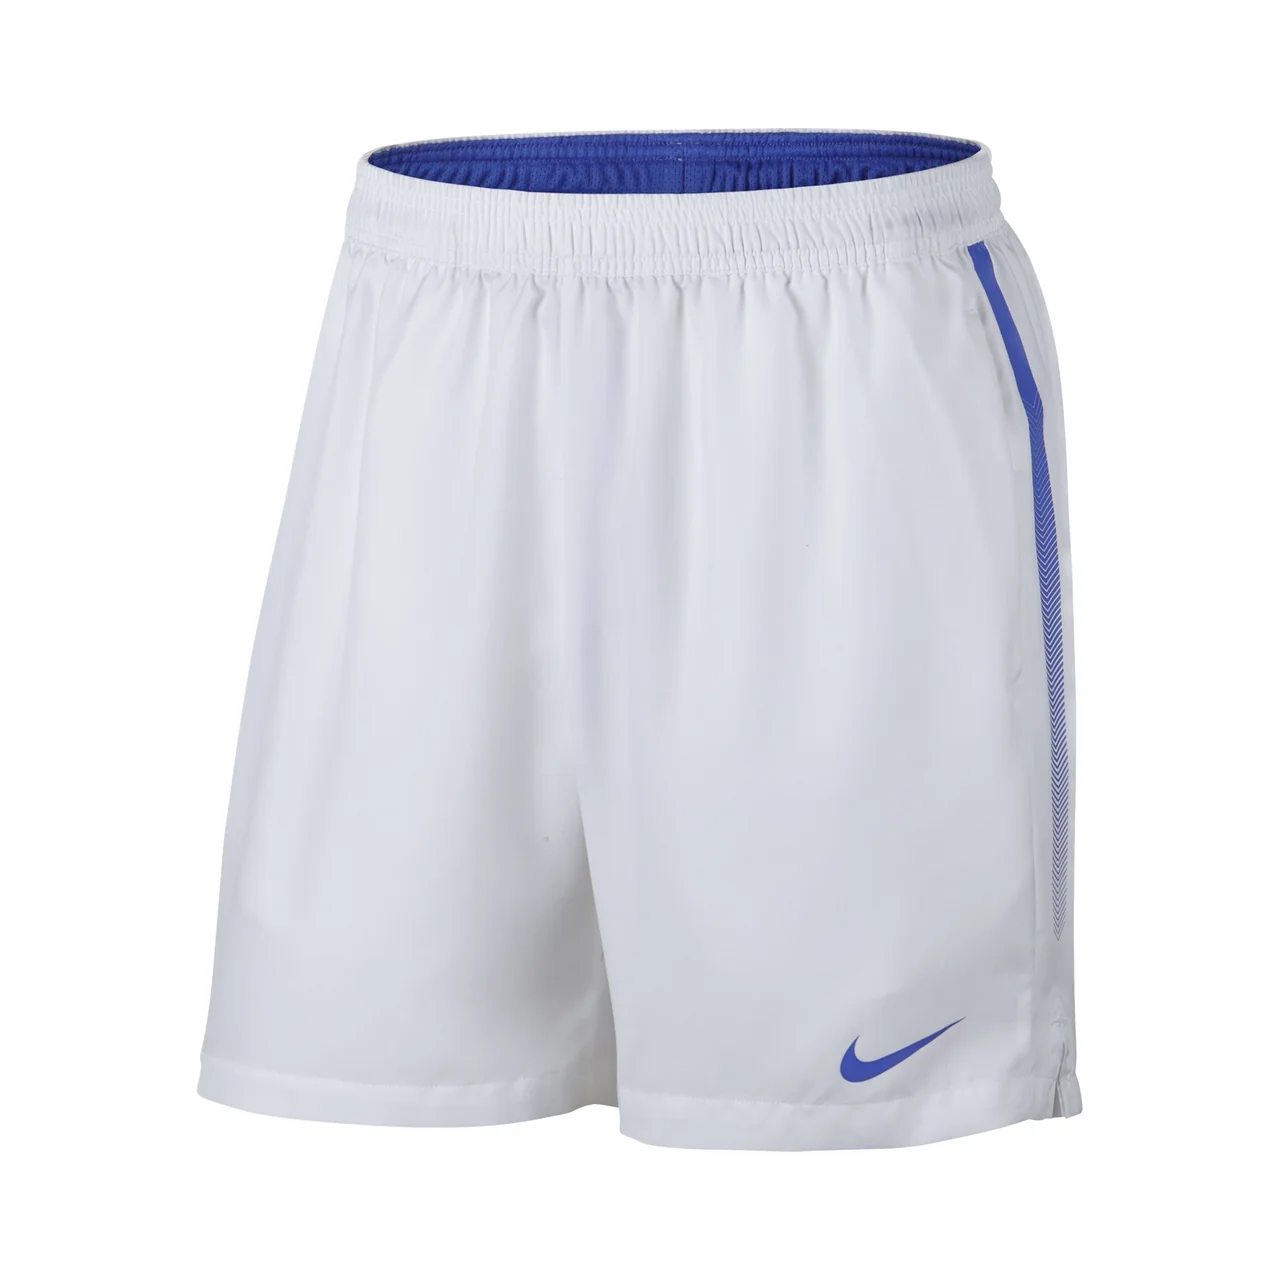 Nike Dry 7'' Shorts White/Blue Size XL